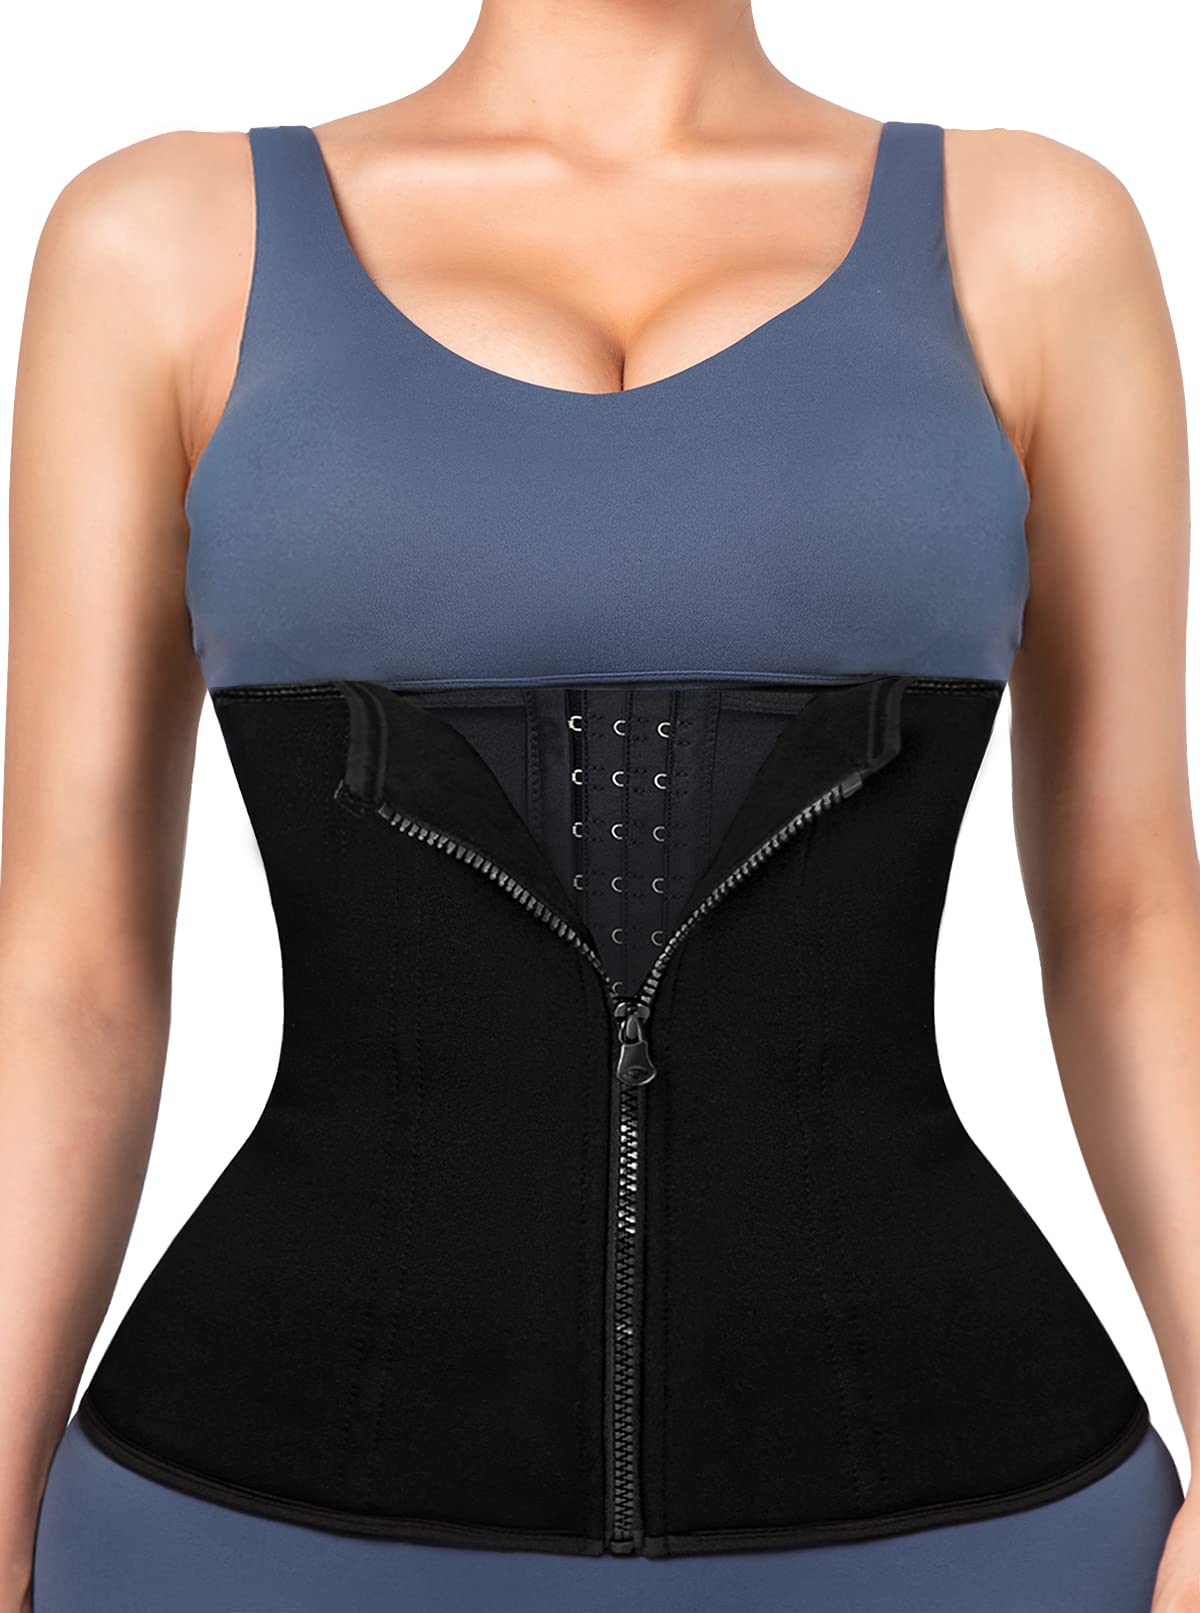 Reamphy Waist Trainer corset Women Workout Trimmer Sweat Sports girdle Belt Body Shaper (Black,S)